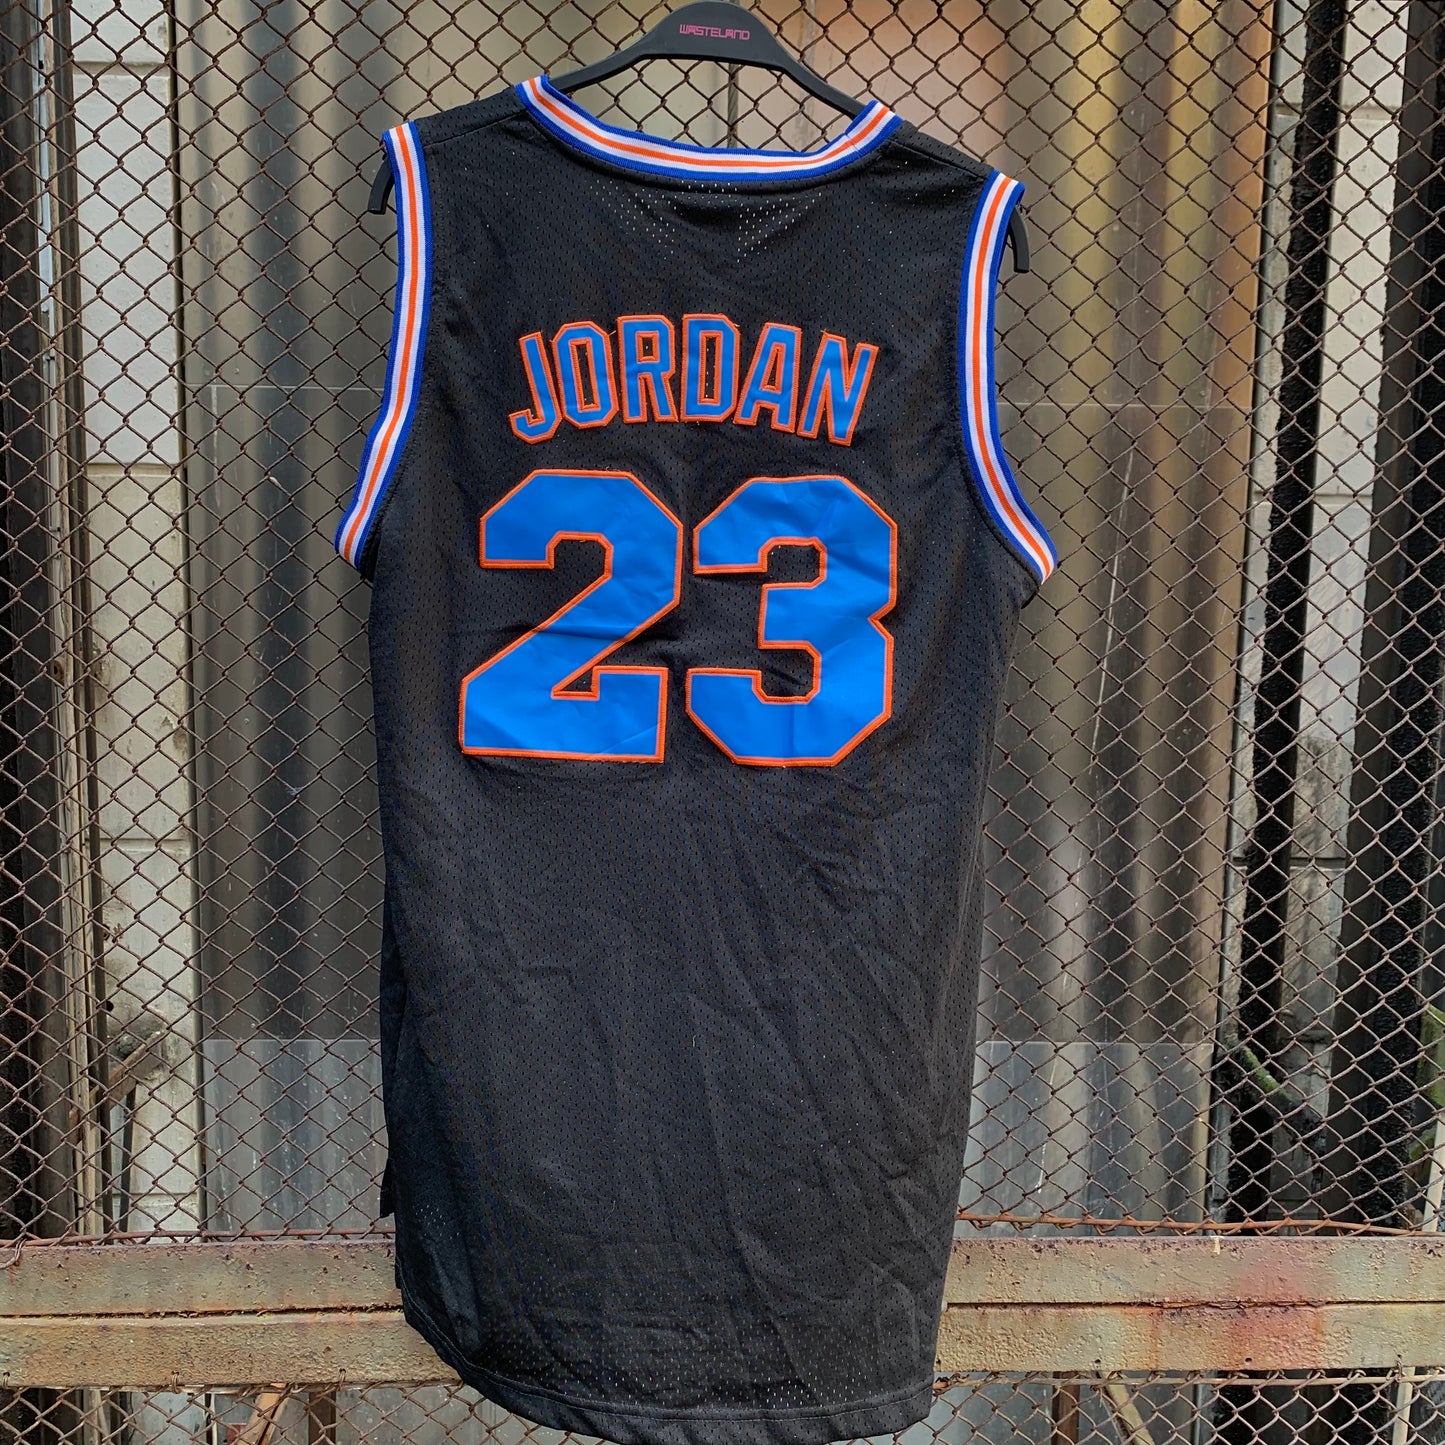 TuneSquad Jersey - Jordan 23